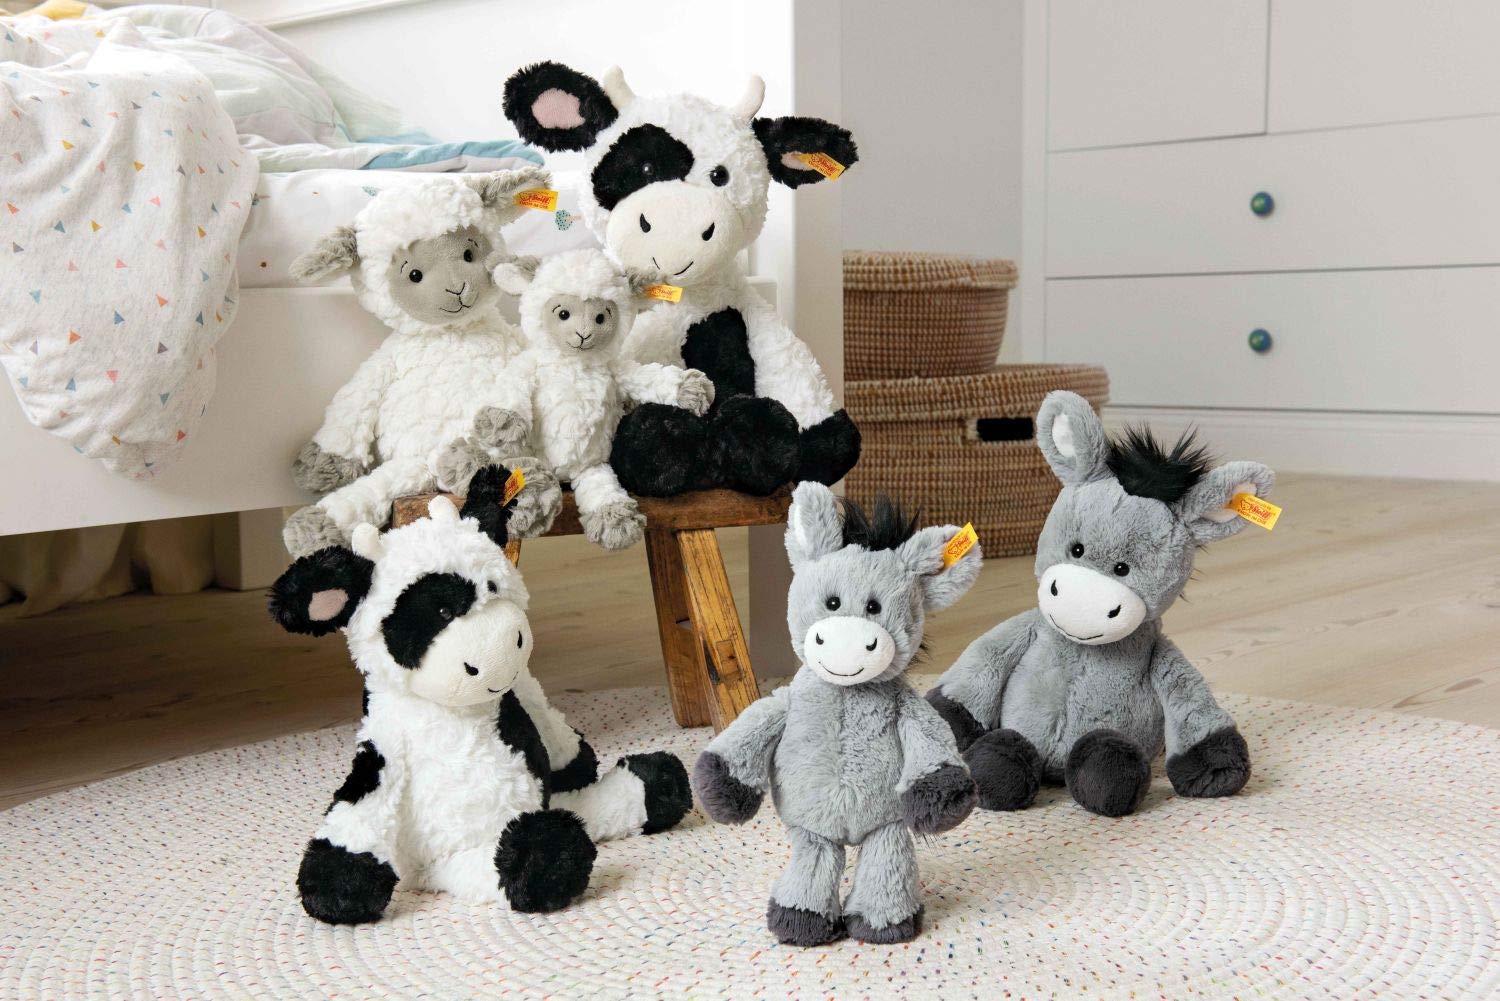 Steiff Lita Lamb Toy Figure - Premium Soft Cuddly Friends Stuffed Animal for Kids (White/Taupe, 12